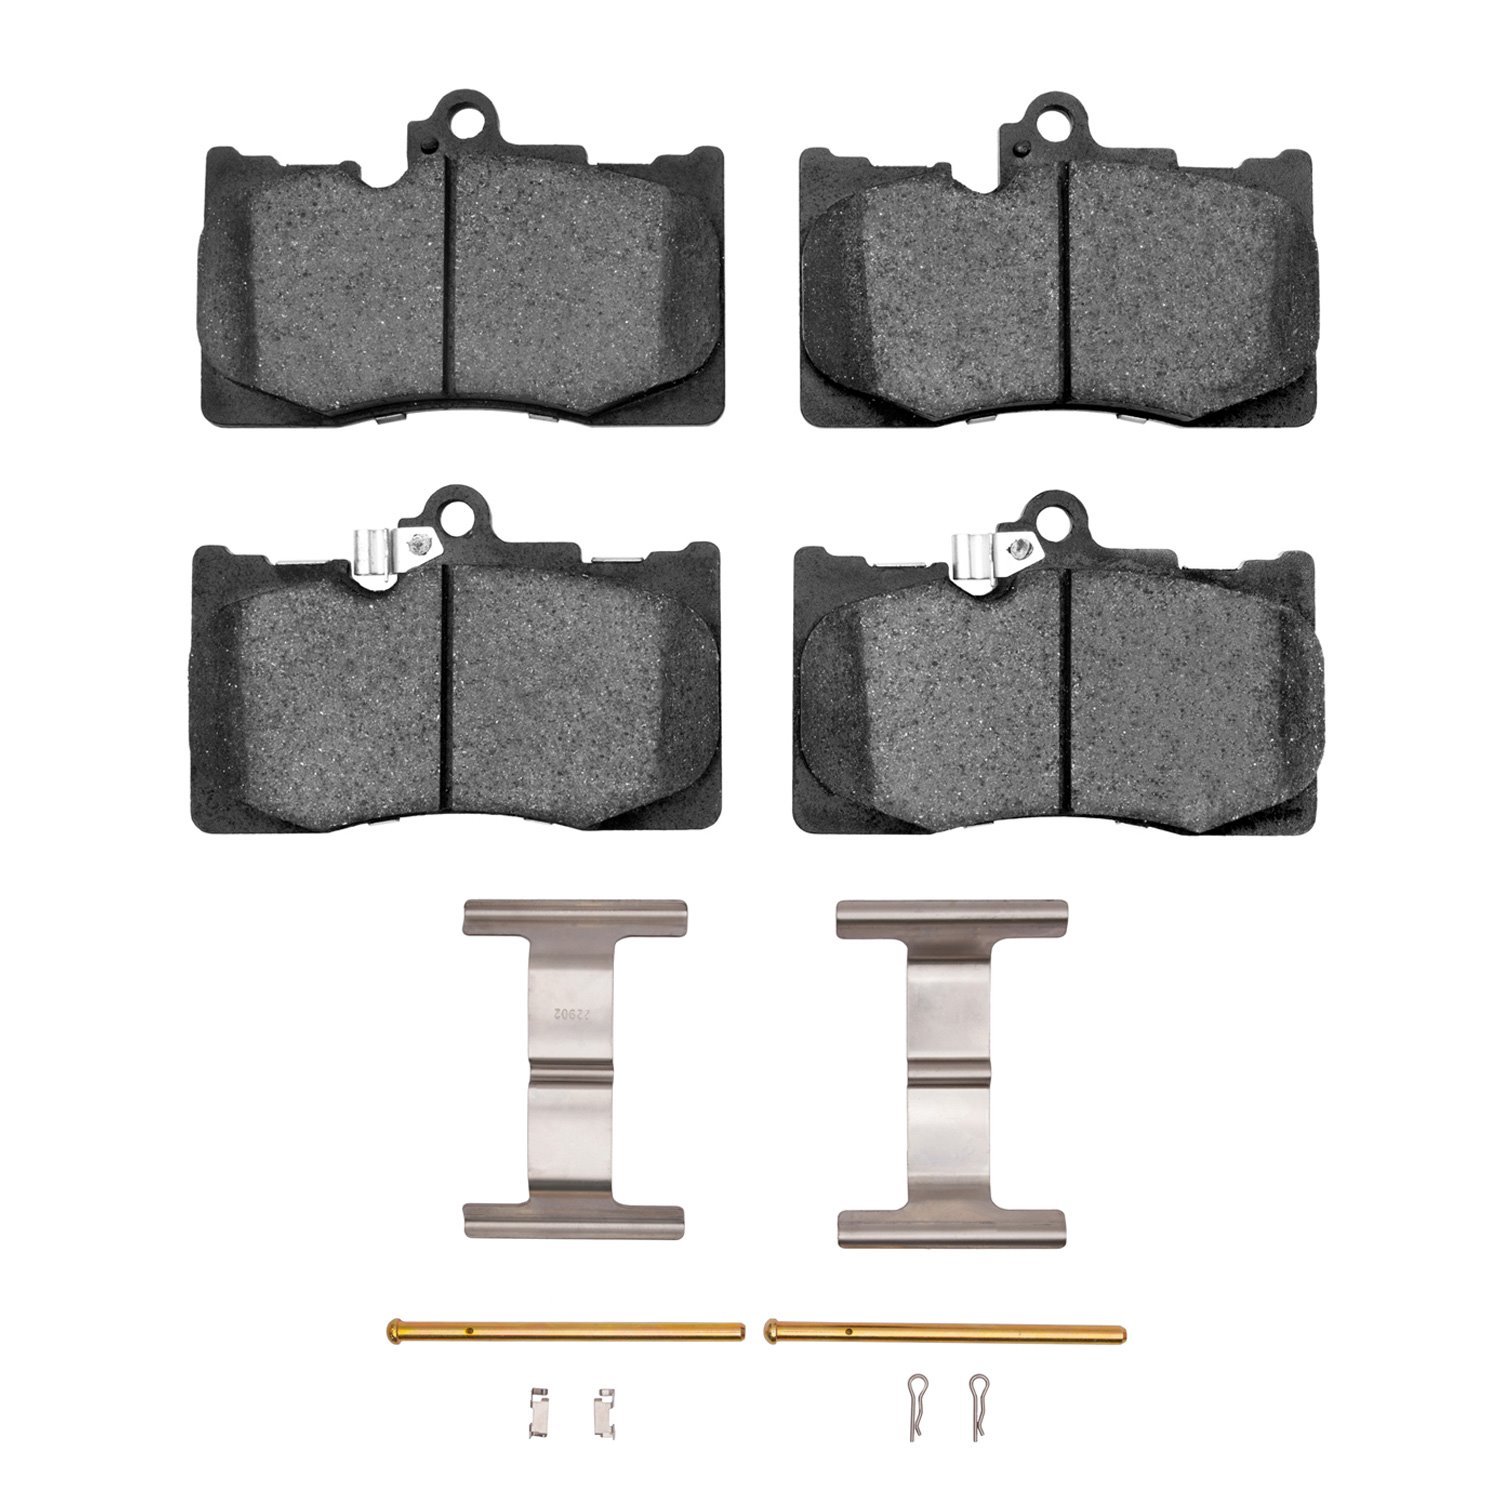 1552-1118-01 5000 Advanced Ceramic Brake Pads & Hardware Kit, Fits Select Lexus/Toyota/Scion, Position: Front